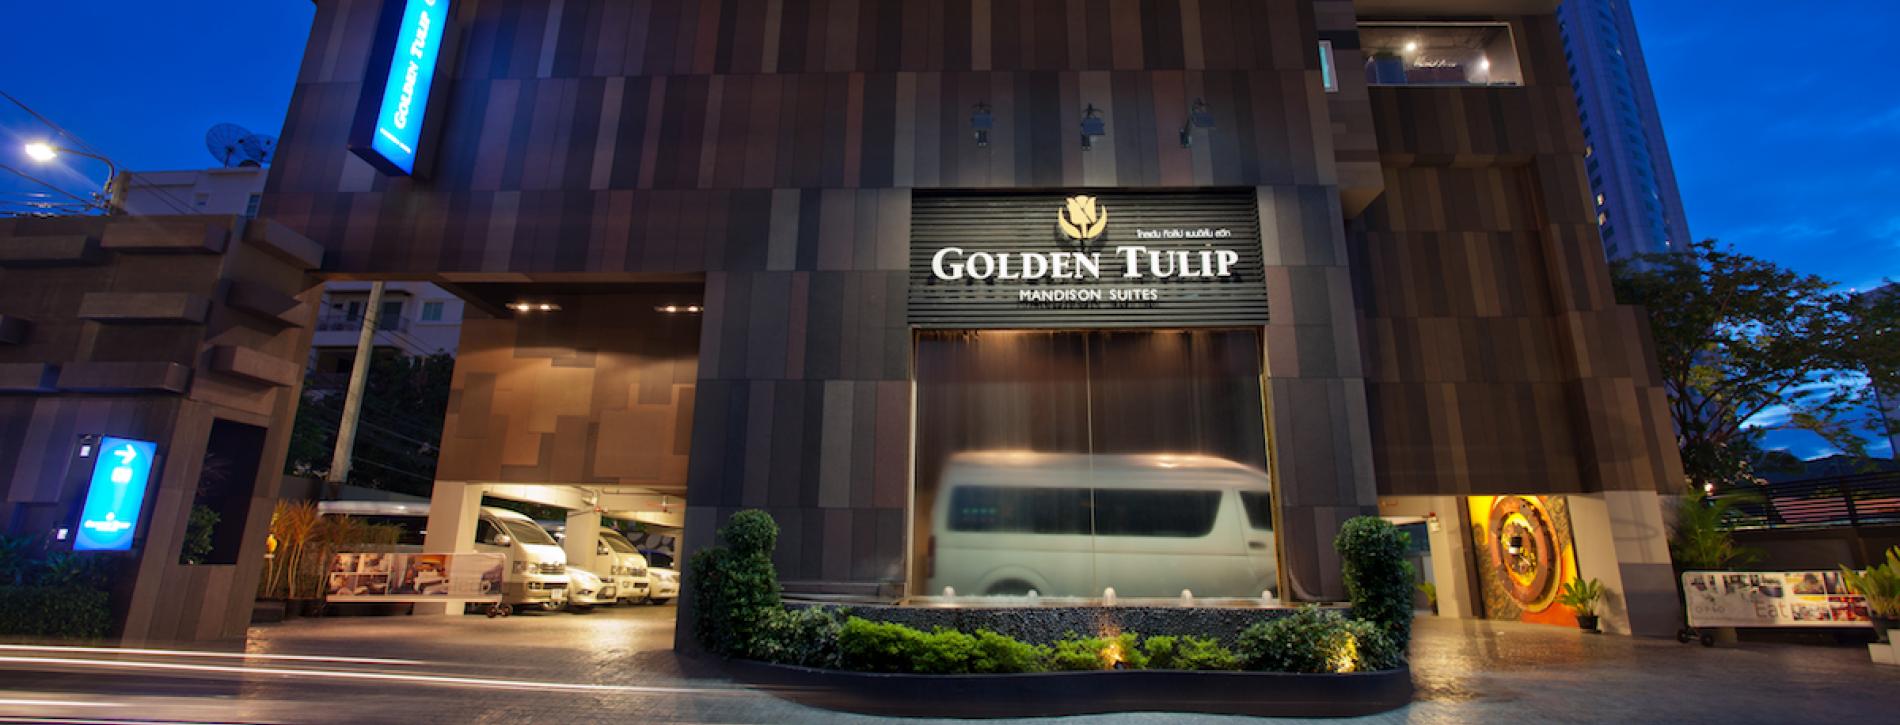  Vacation Hub International | Golden Tulip Mandison Suites Main